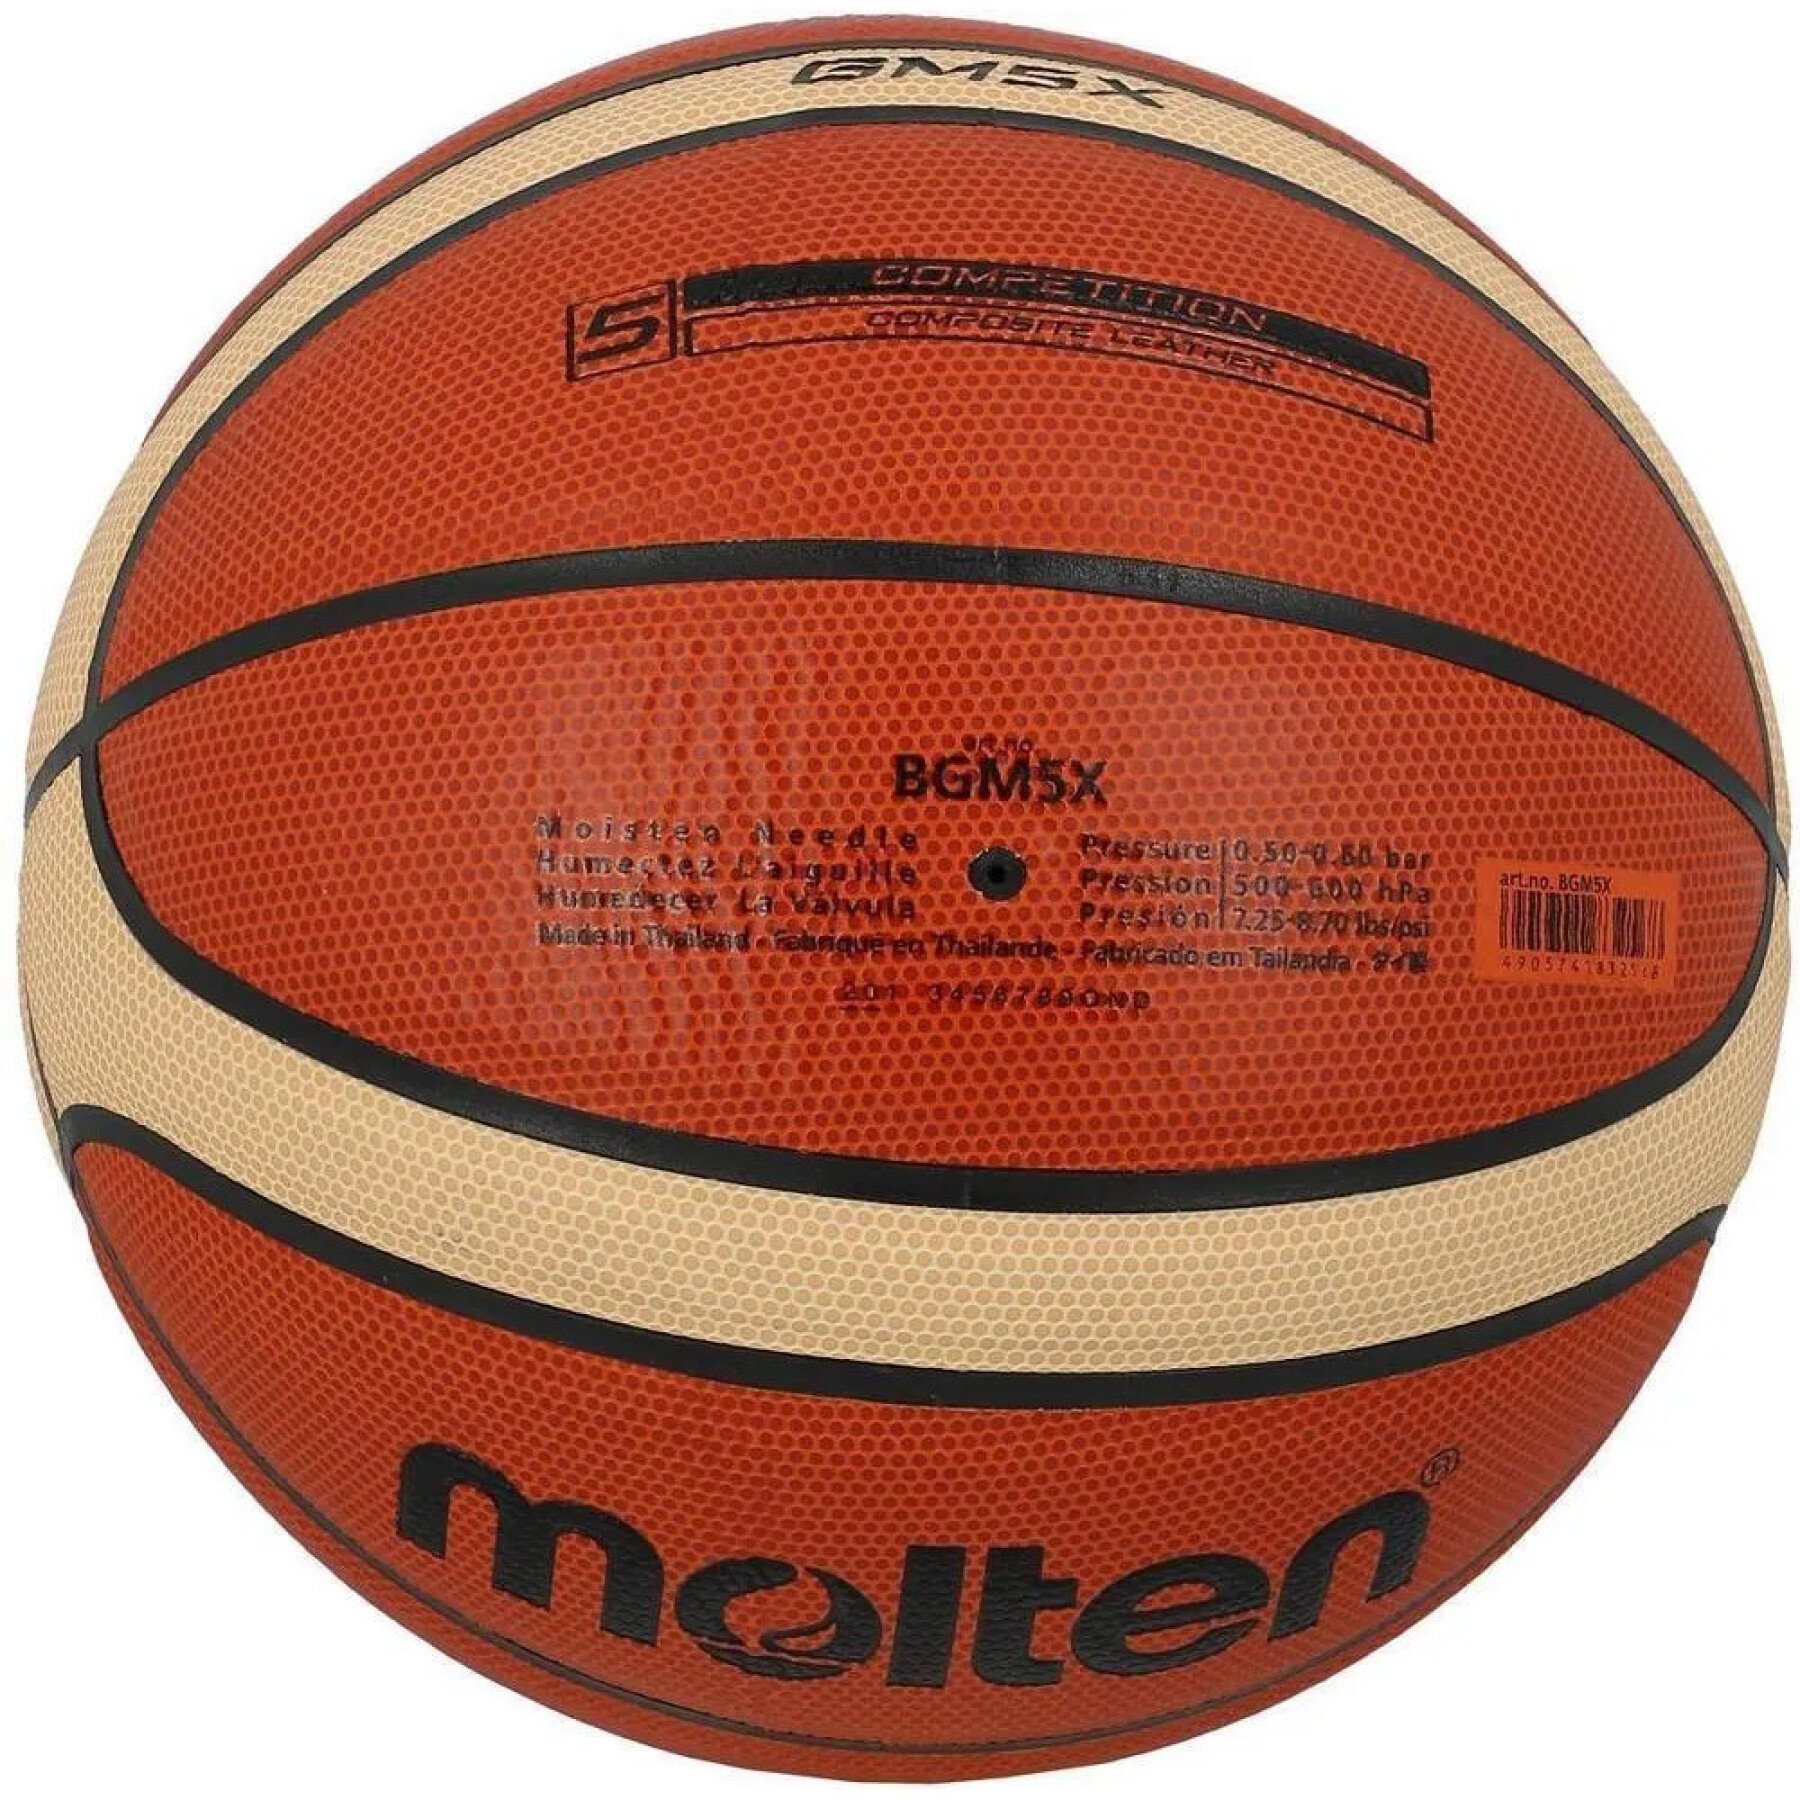 Competition ball Molten BGMX